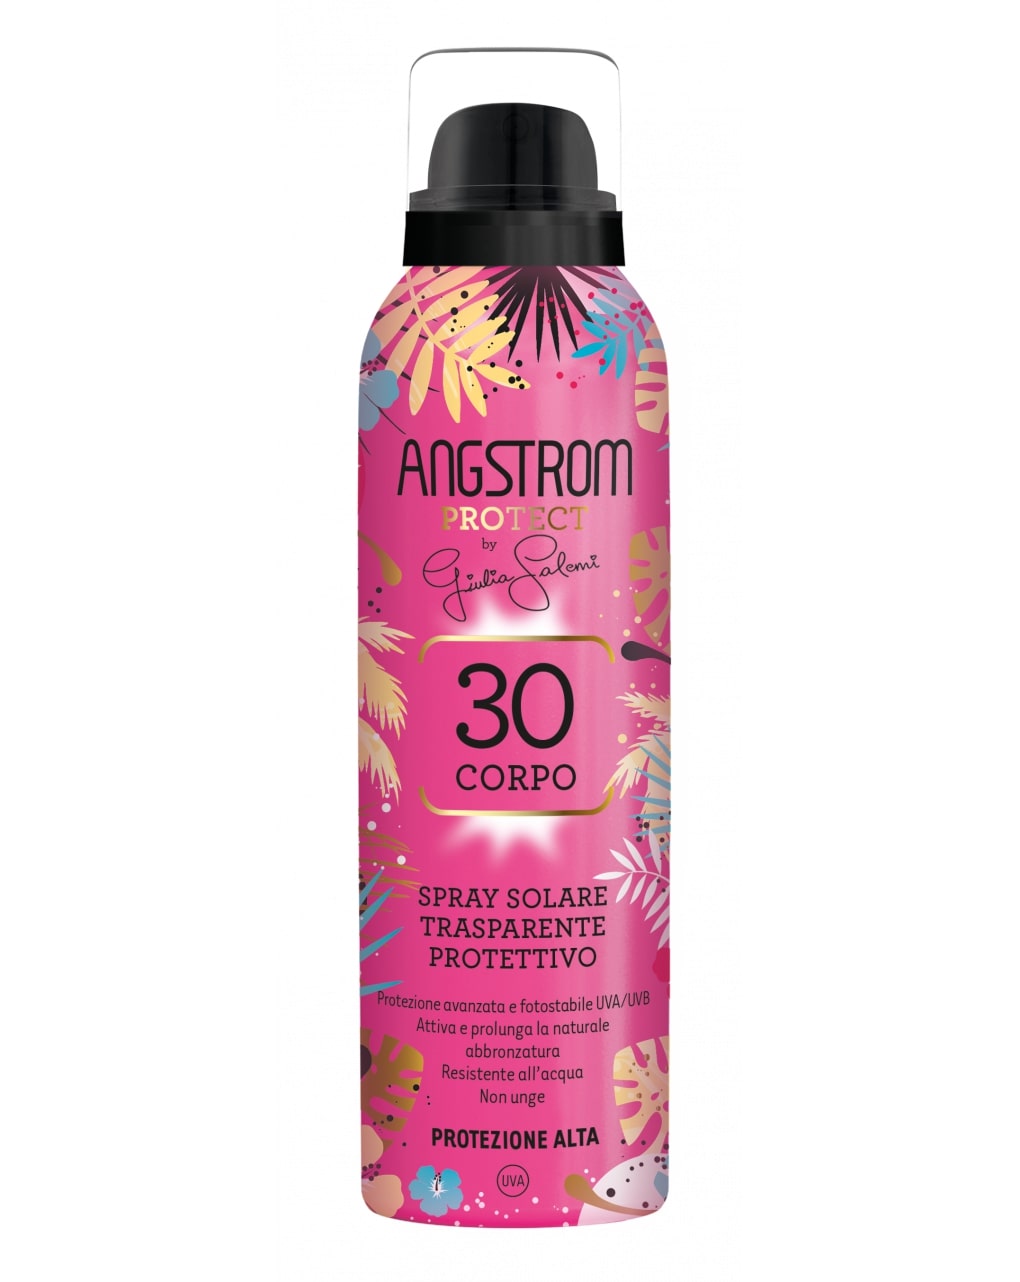 Angstrom protect spray trasparente solare protettivo spf 30  limited edition - Angstrom